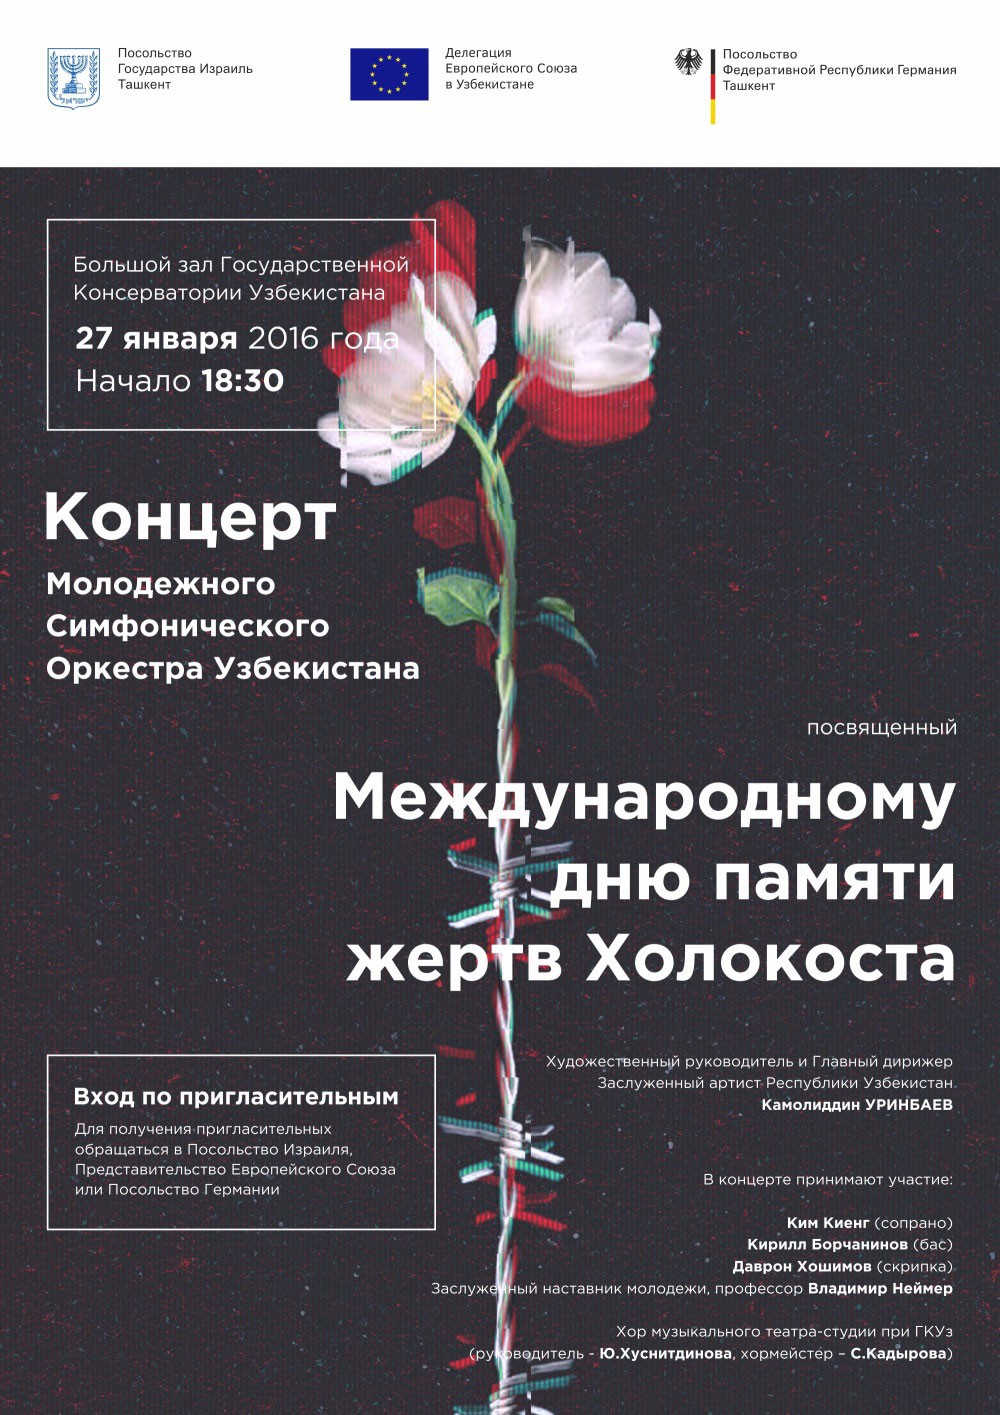 Концерт Памяти Жертв Холокоста в Ташкенте